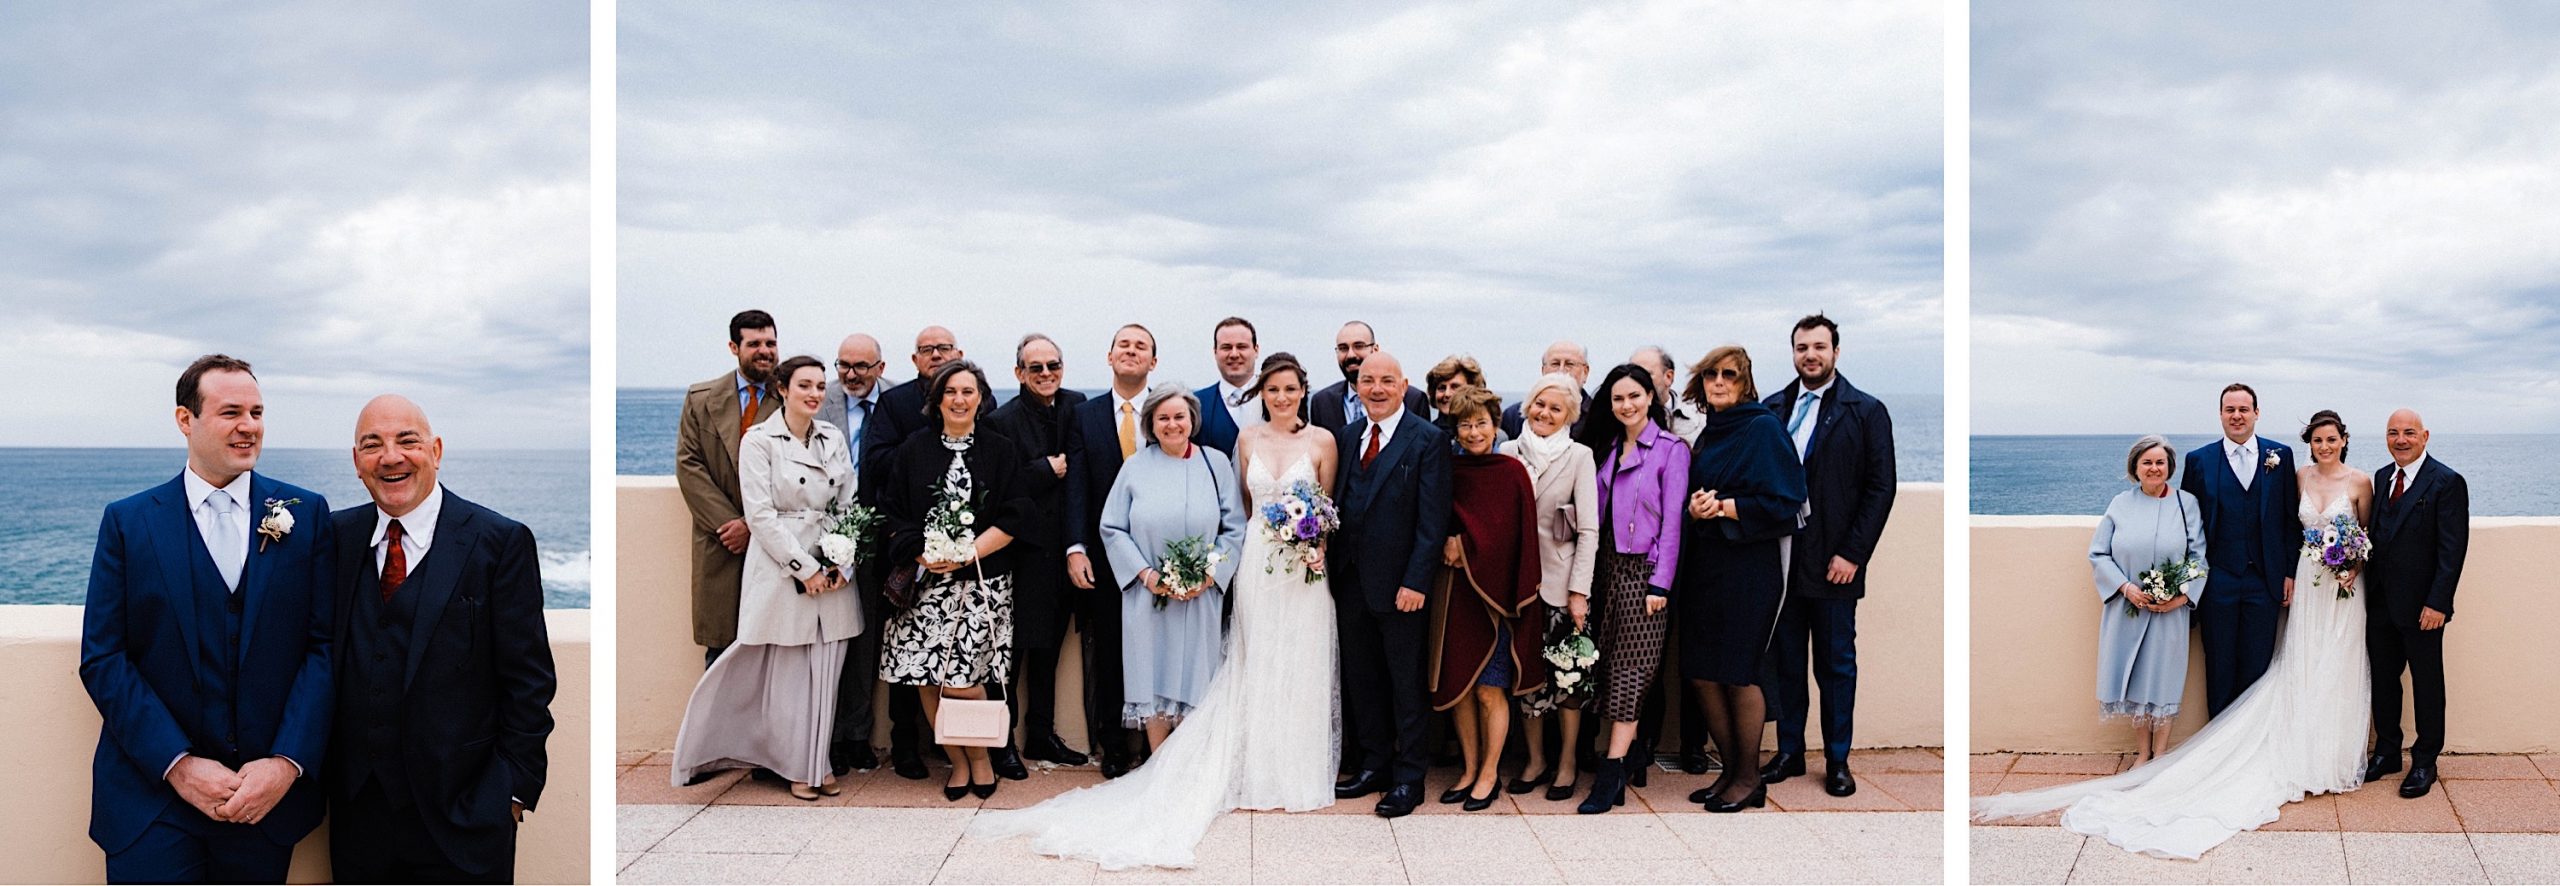 Italian wedding photos of the groom's family at his Wedding on the Italian Riviera.